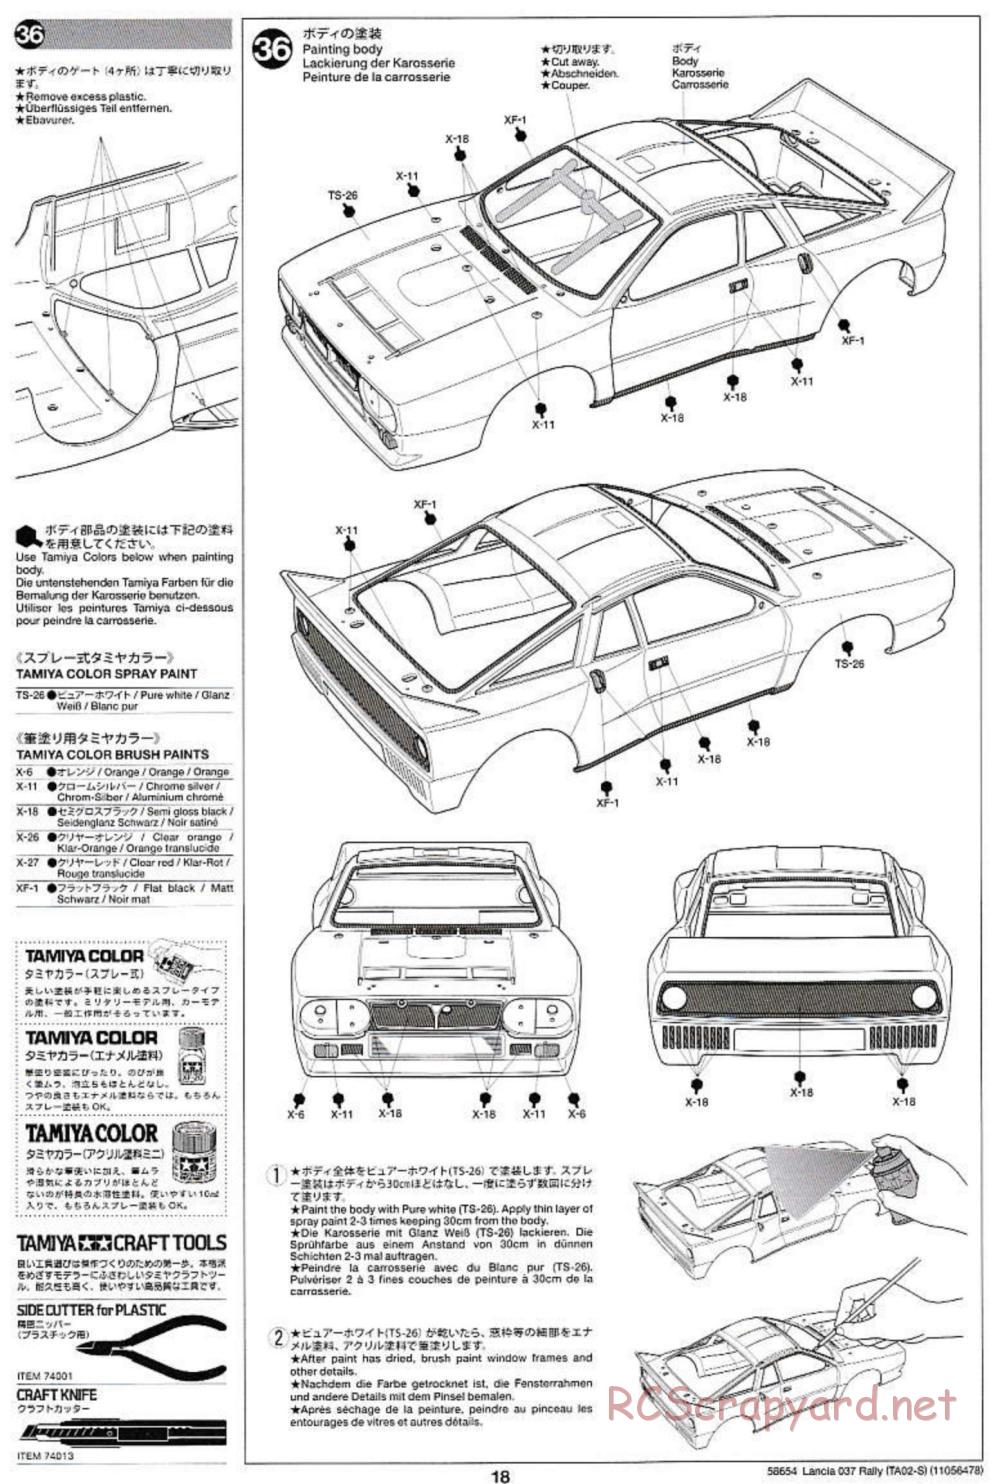 Tamiya - Lancia 037 Rally Chassis - Manual - Page 18